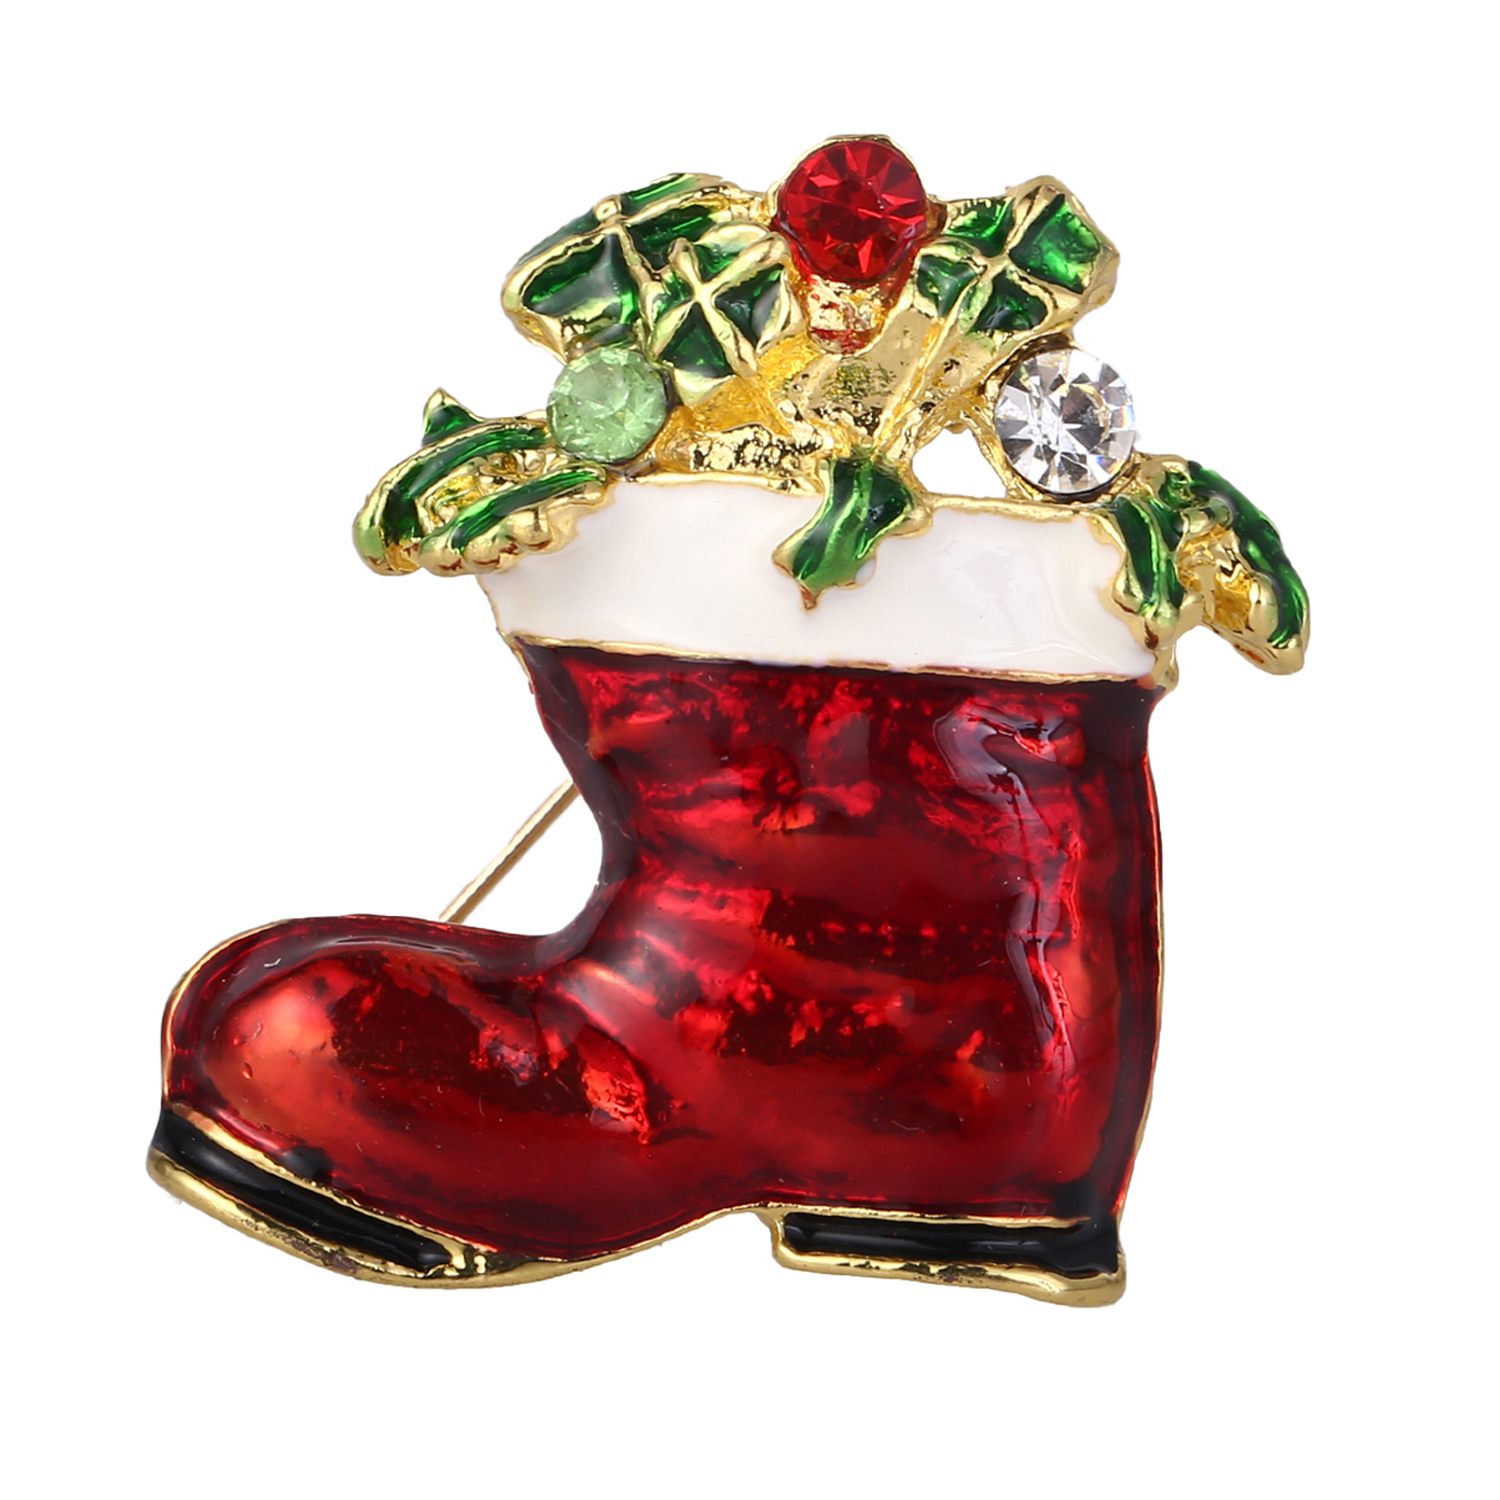 Santa's Boot